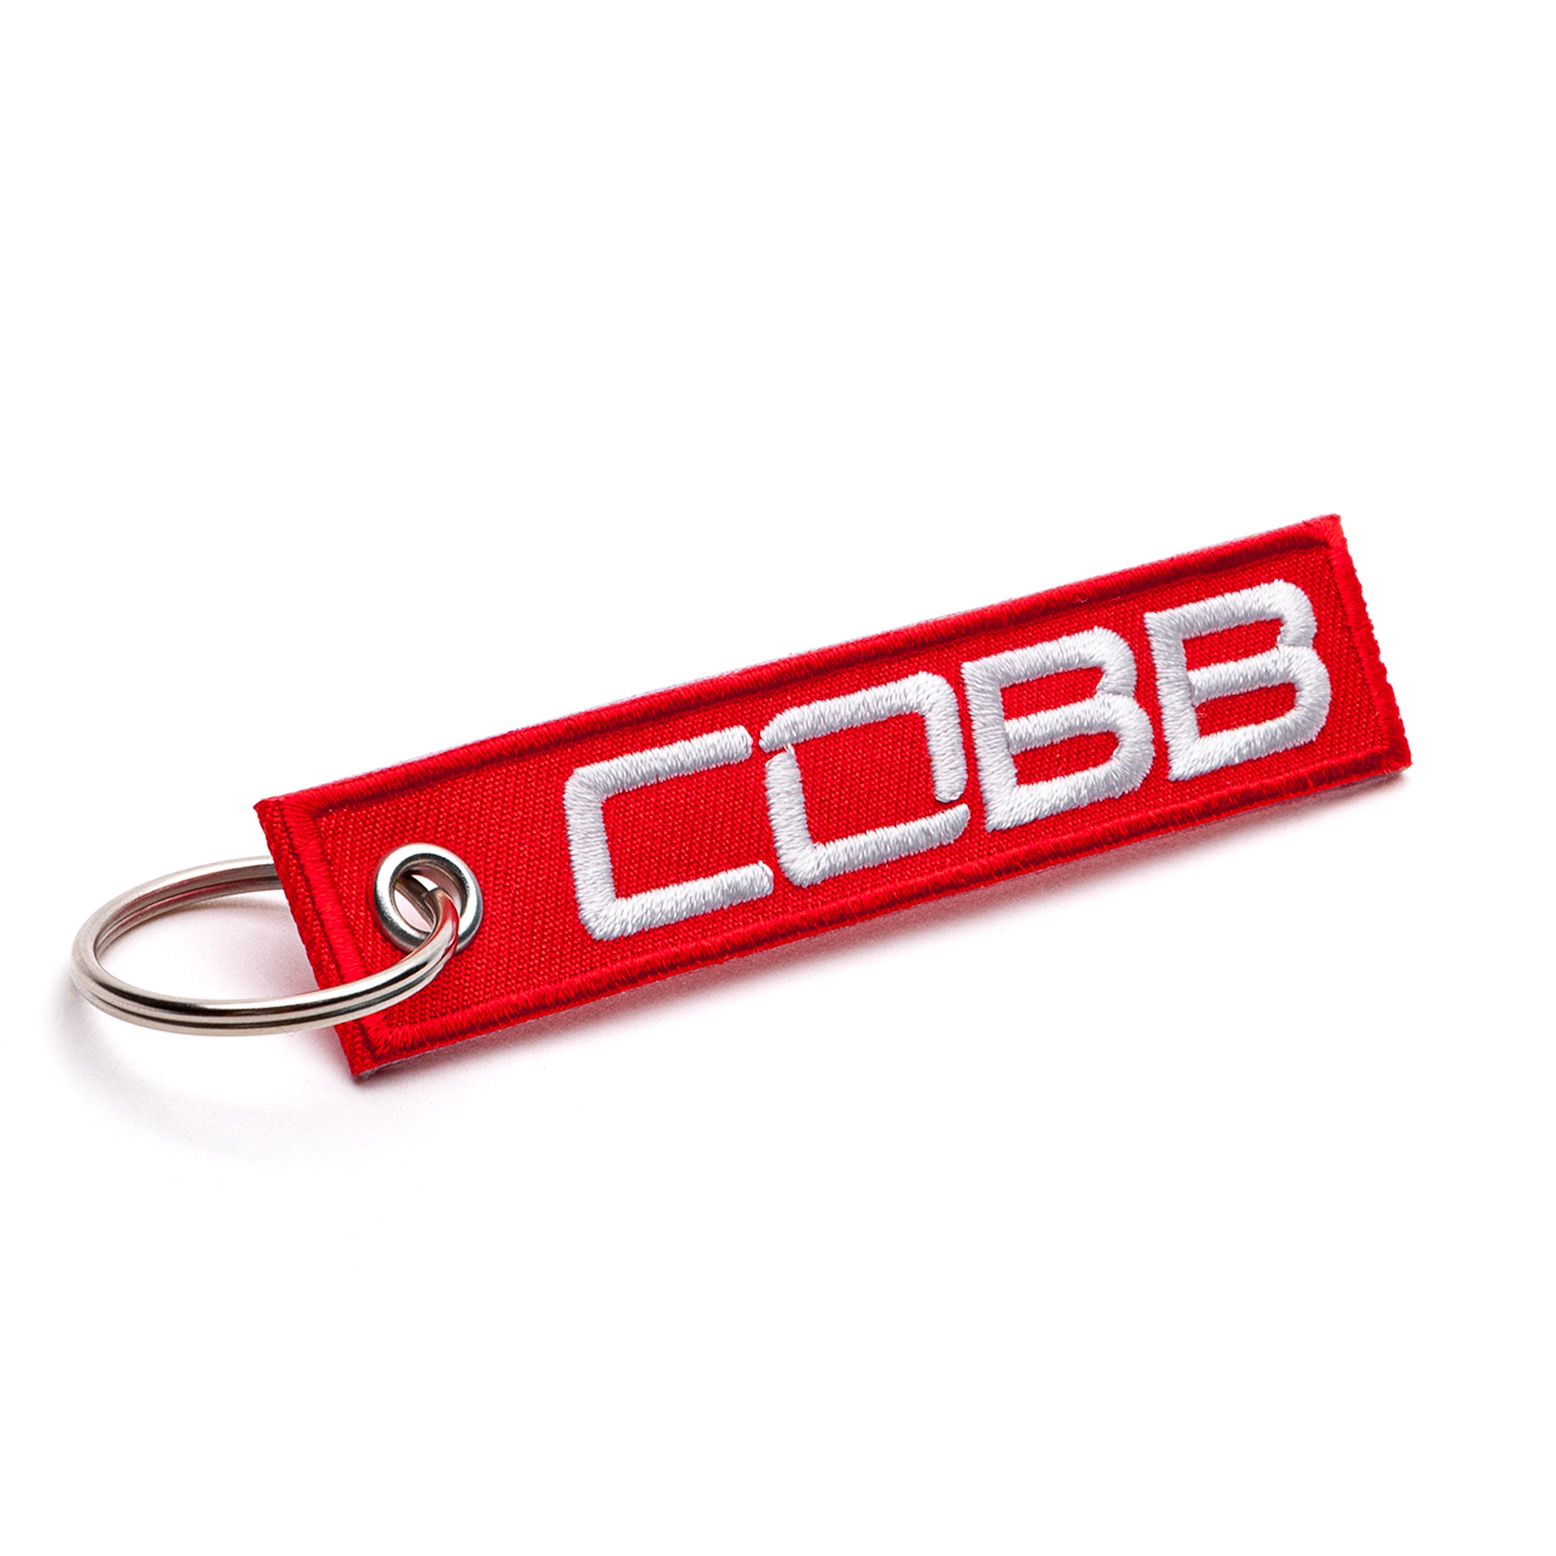 COBB Embroidered Keychain